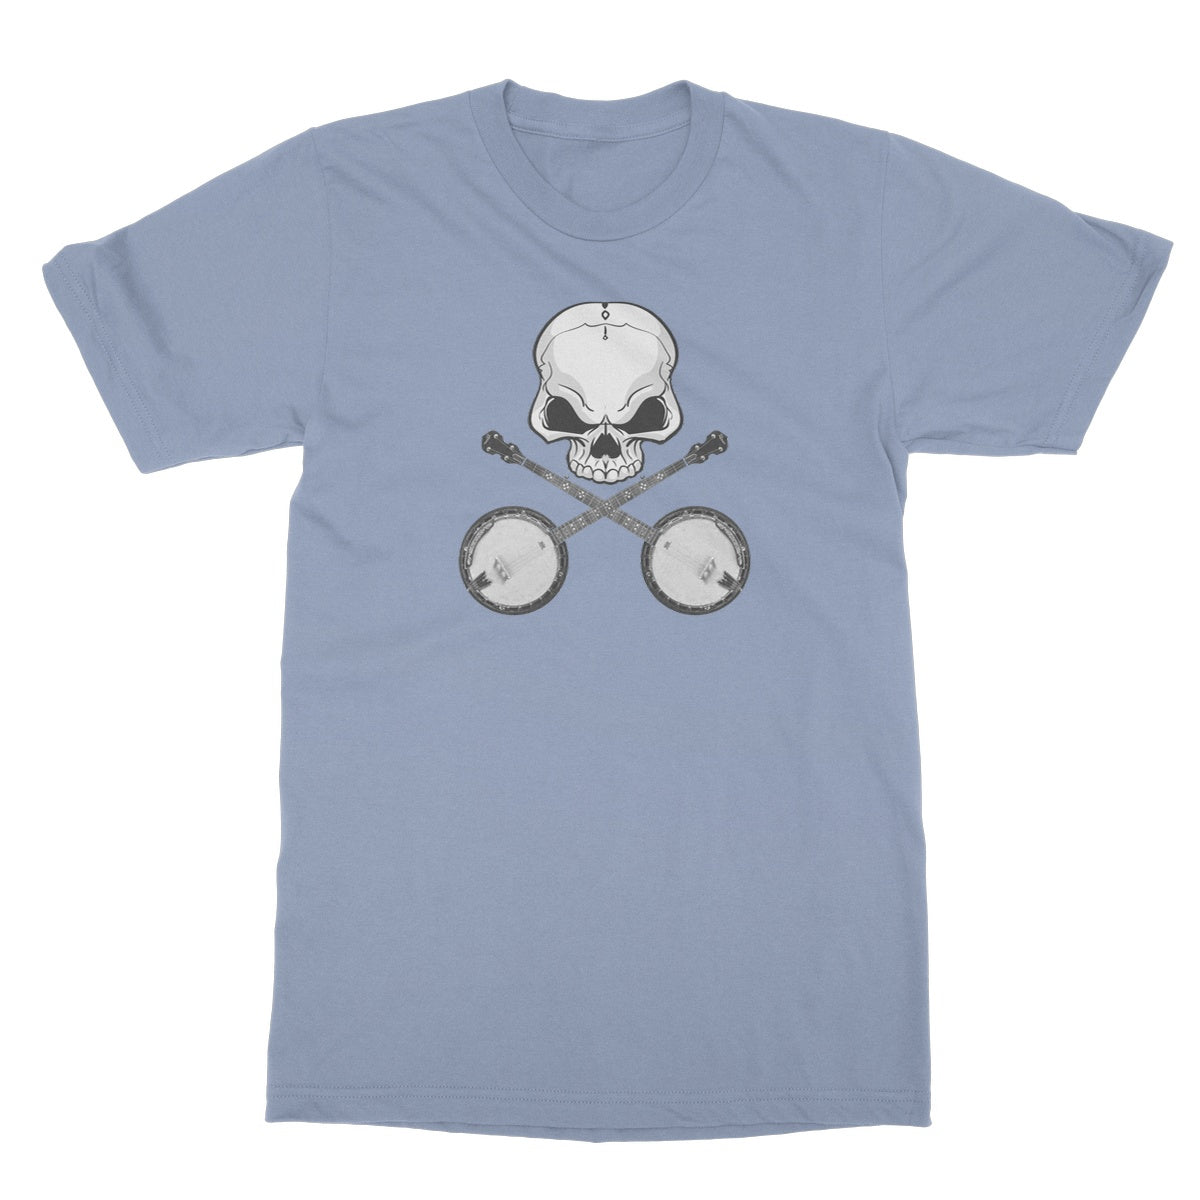 Skull and crossed Banjos T-Shirt